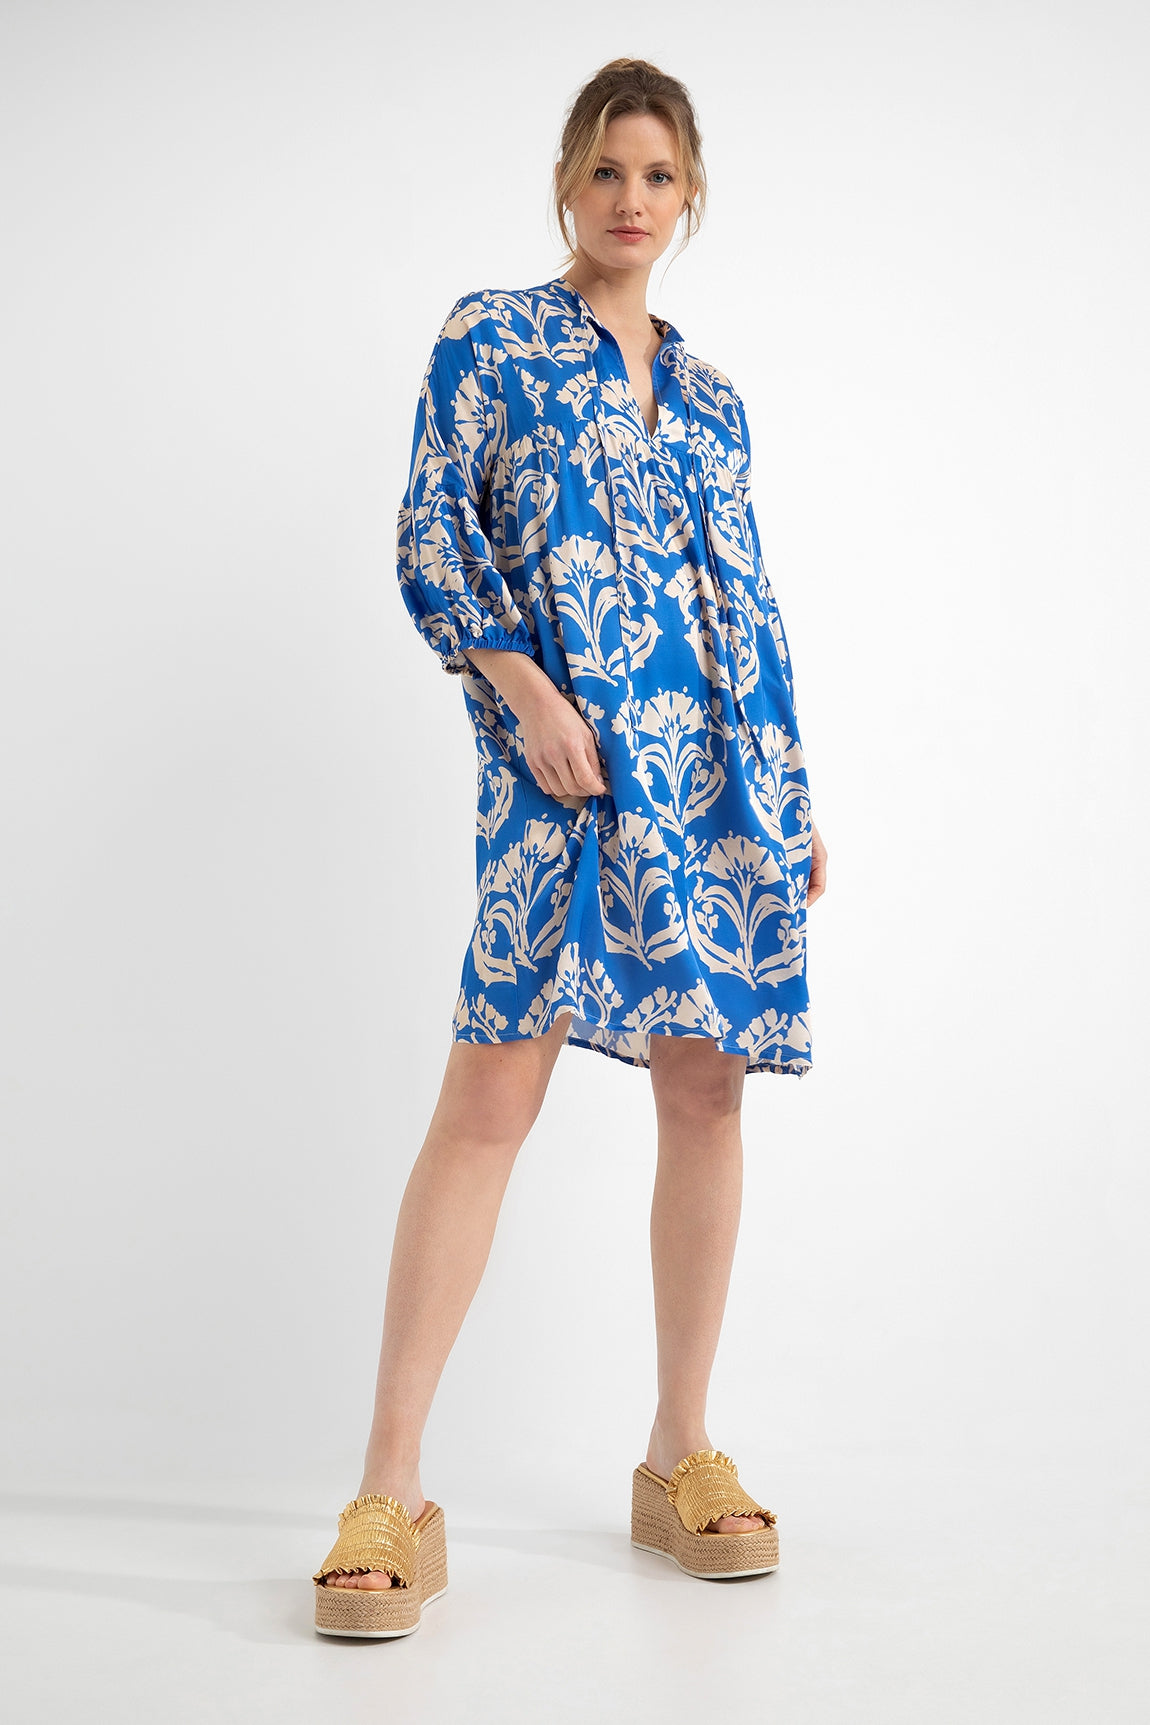 Josephine 3/4 Sleeve Top - Navy – TULIO Fashion